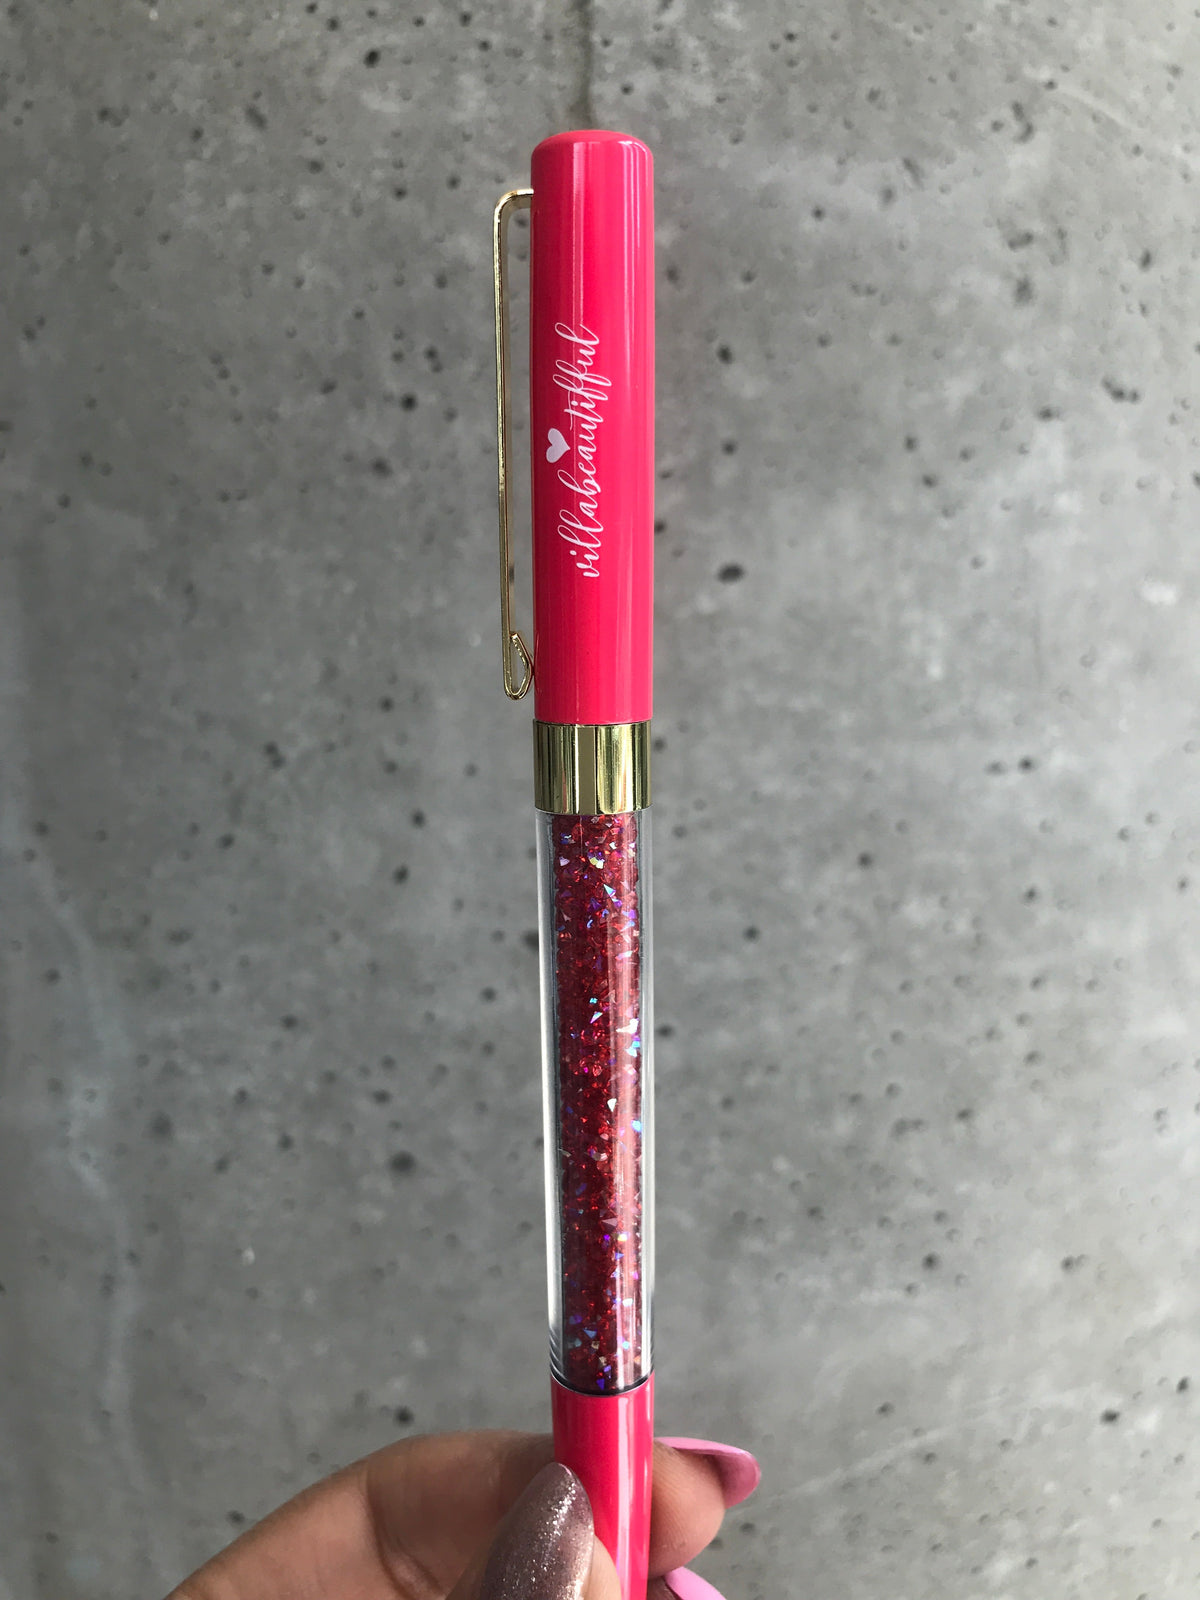 Cherry Bomb Imperfect Crystal VBPen | limited pen